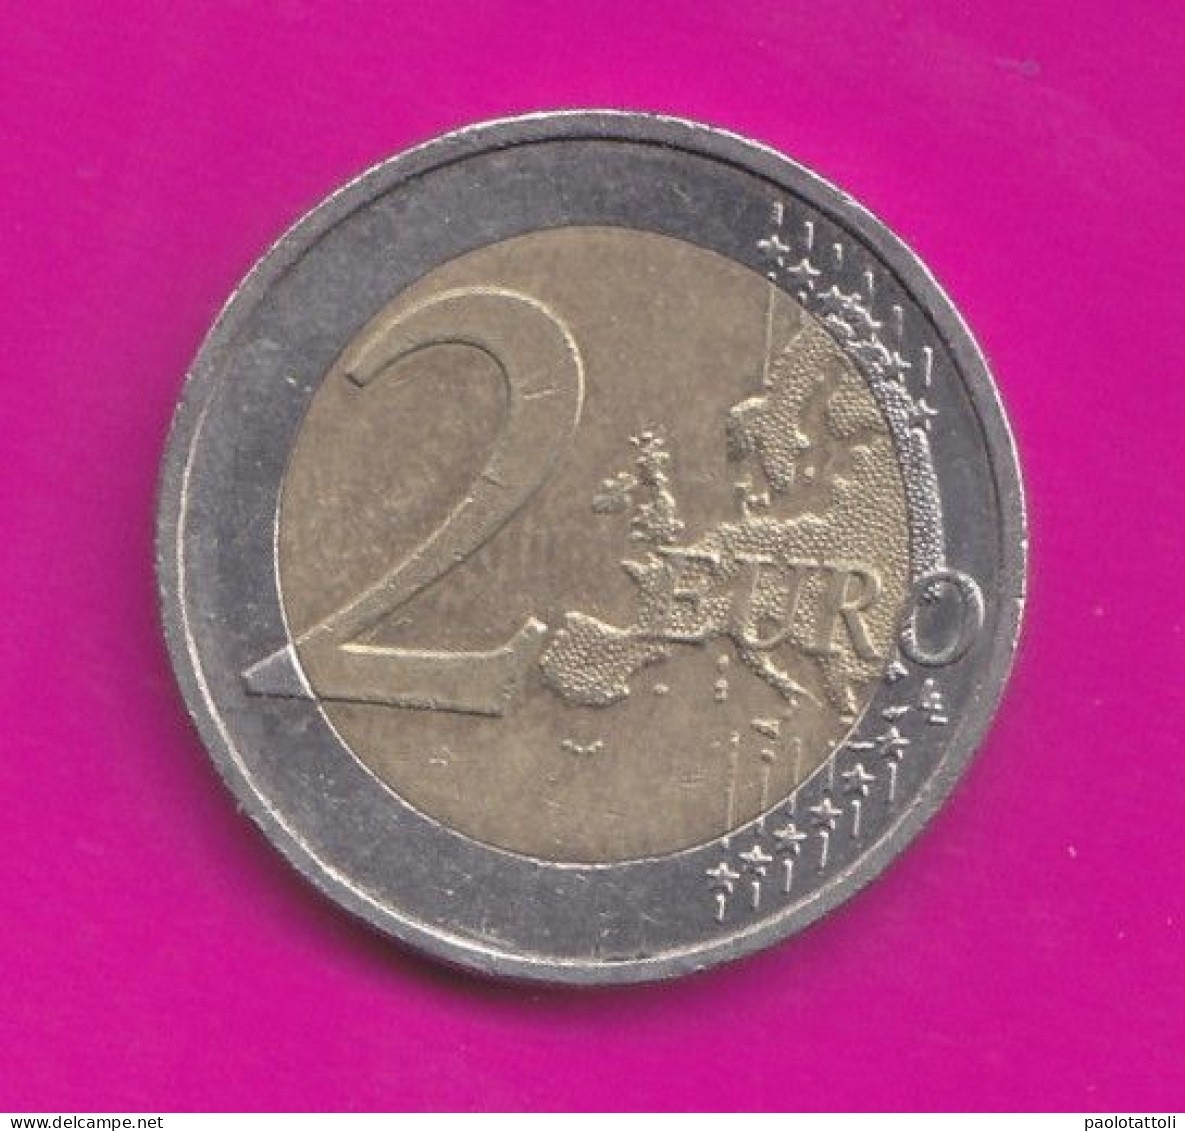 Germany, 2022-Mint Munich (D)- 2 Euro Commemorative- Obverse  Thurningen. Reverse Map Of Western Europe- - Germany